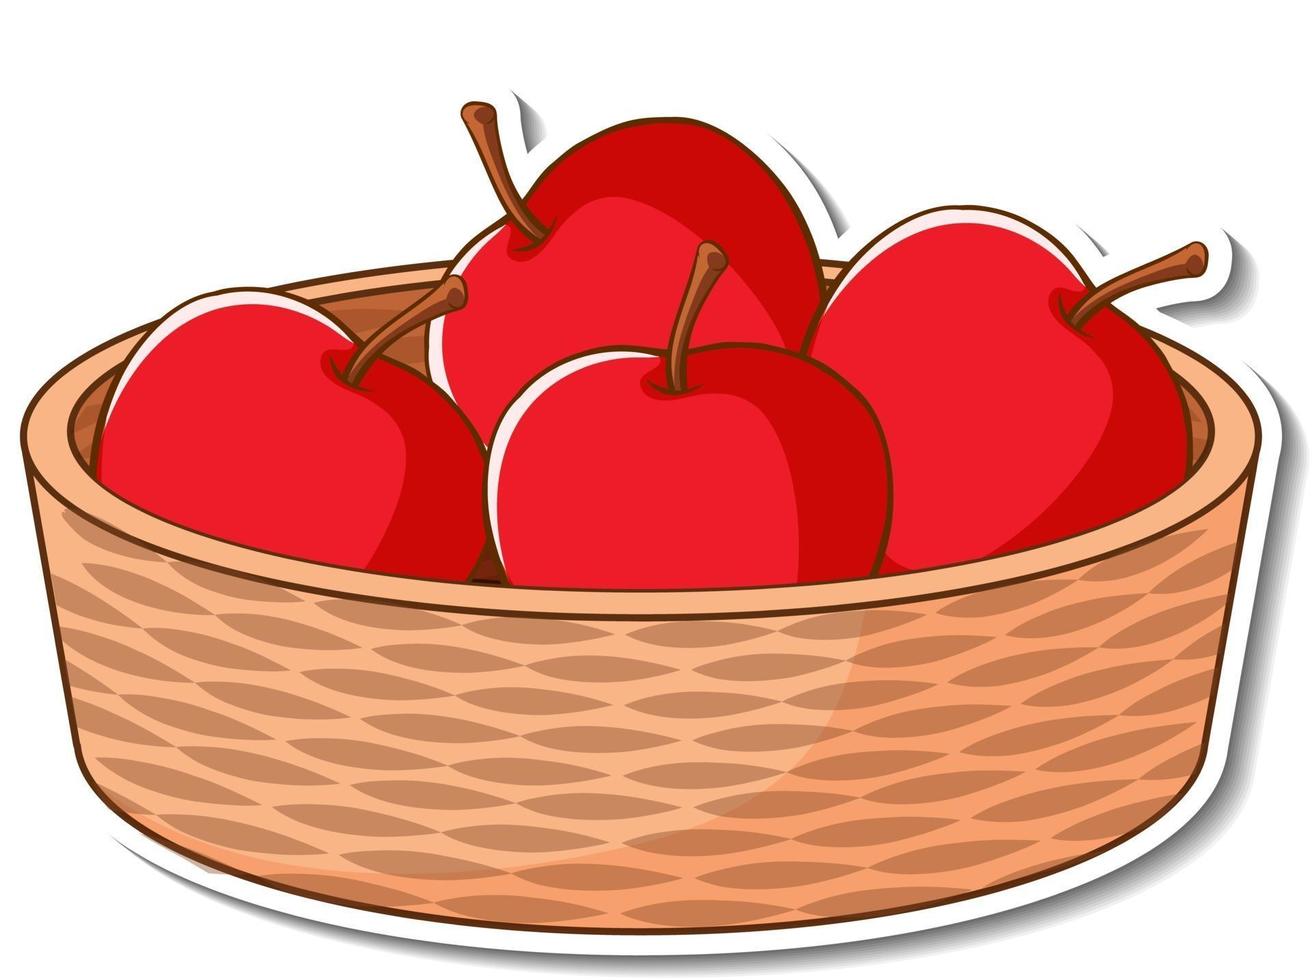 Stickerkorb mit vielen roten Äpfeln vektor